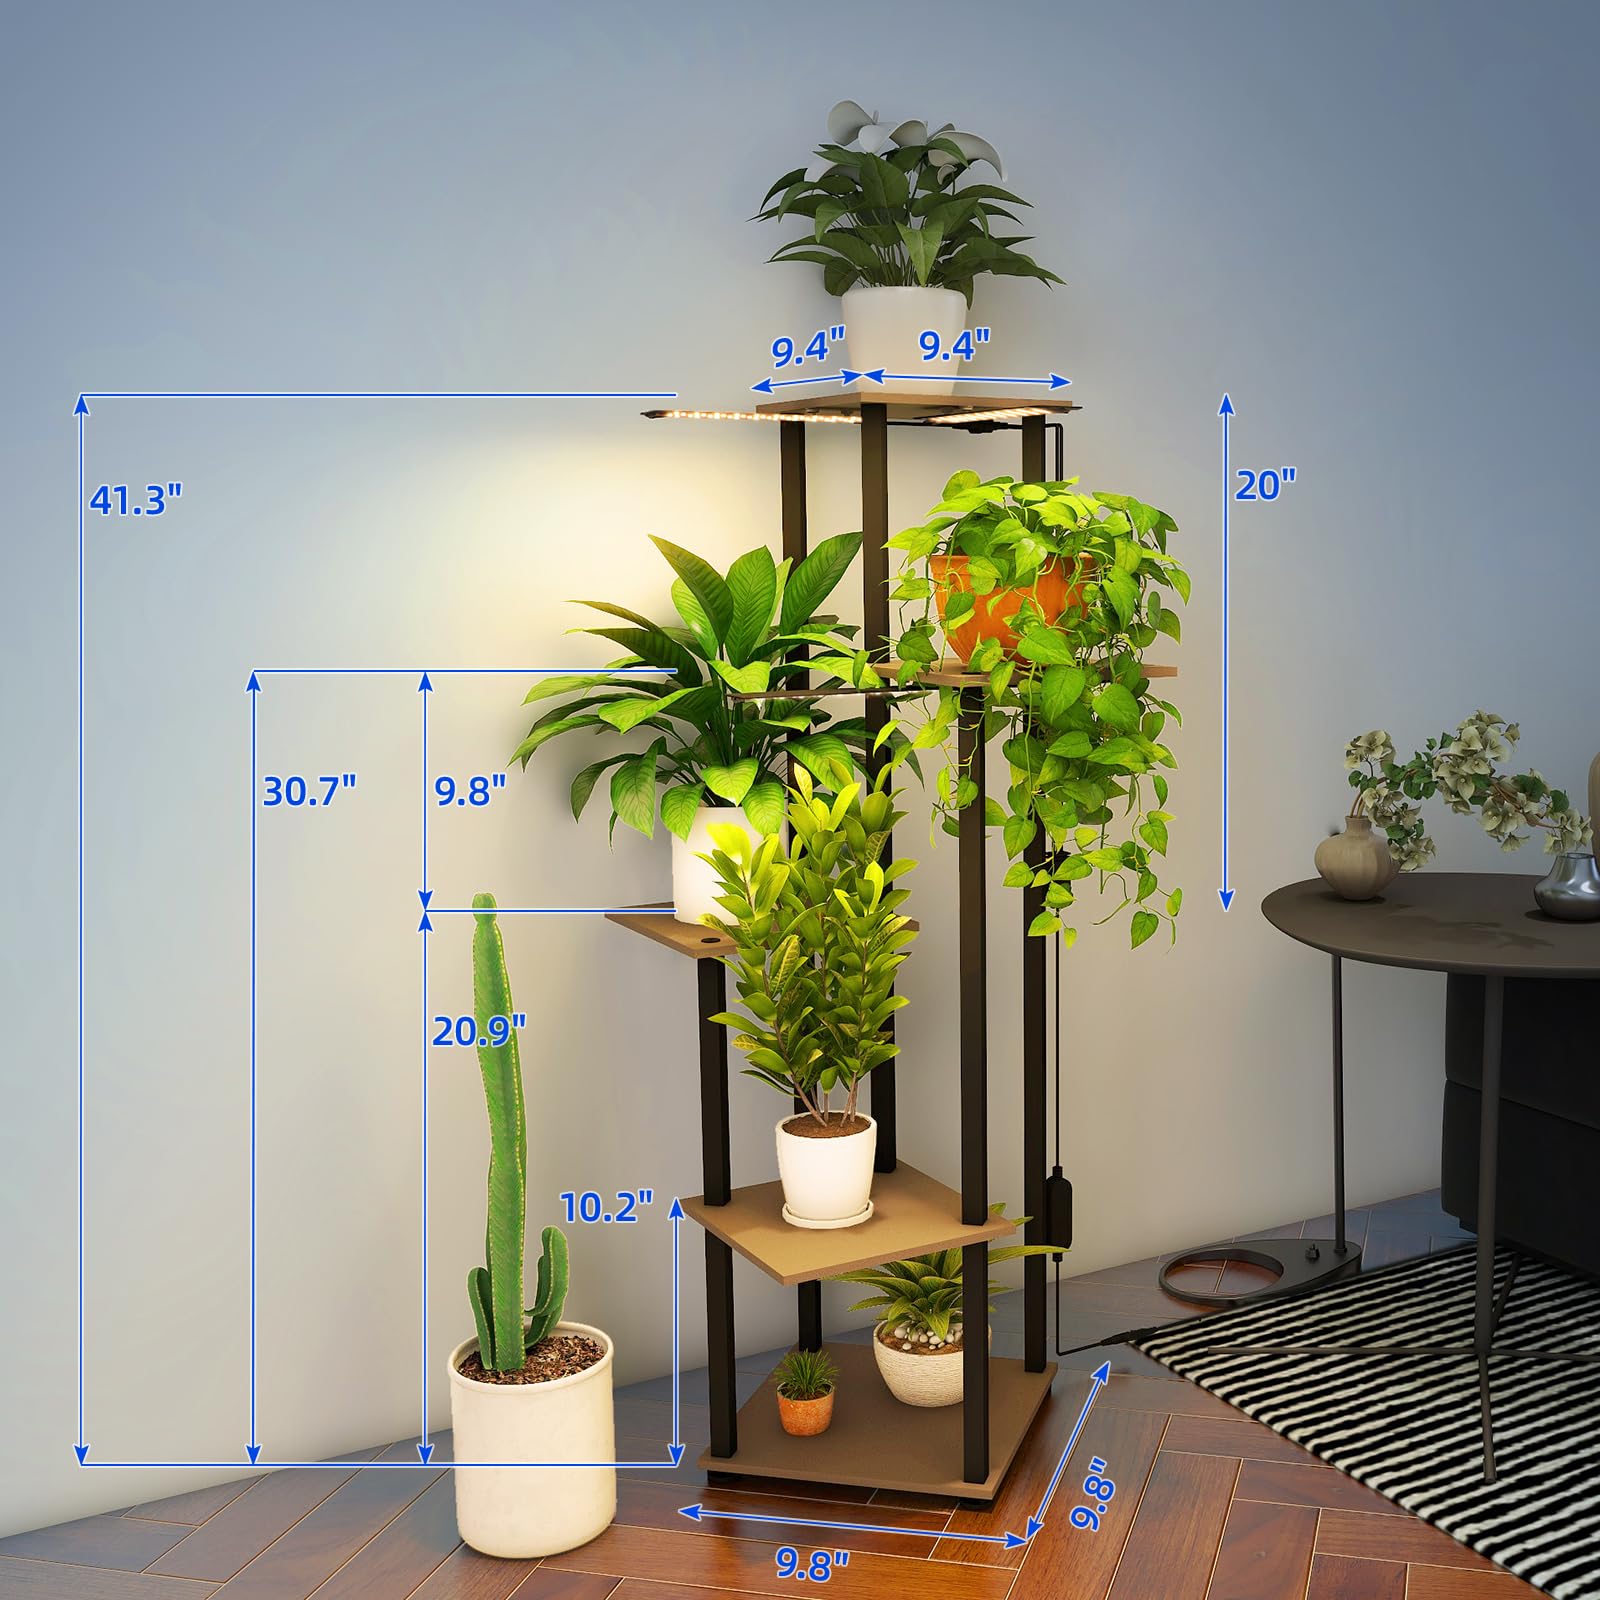 5 - Tier Plant Stand with LED Grow Lights,9.8"x9.8"x41.3",8W,Full Spectrum,3 lights,CJ08BBJ - Barrina led